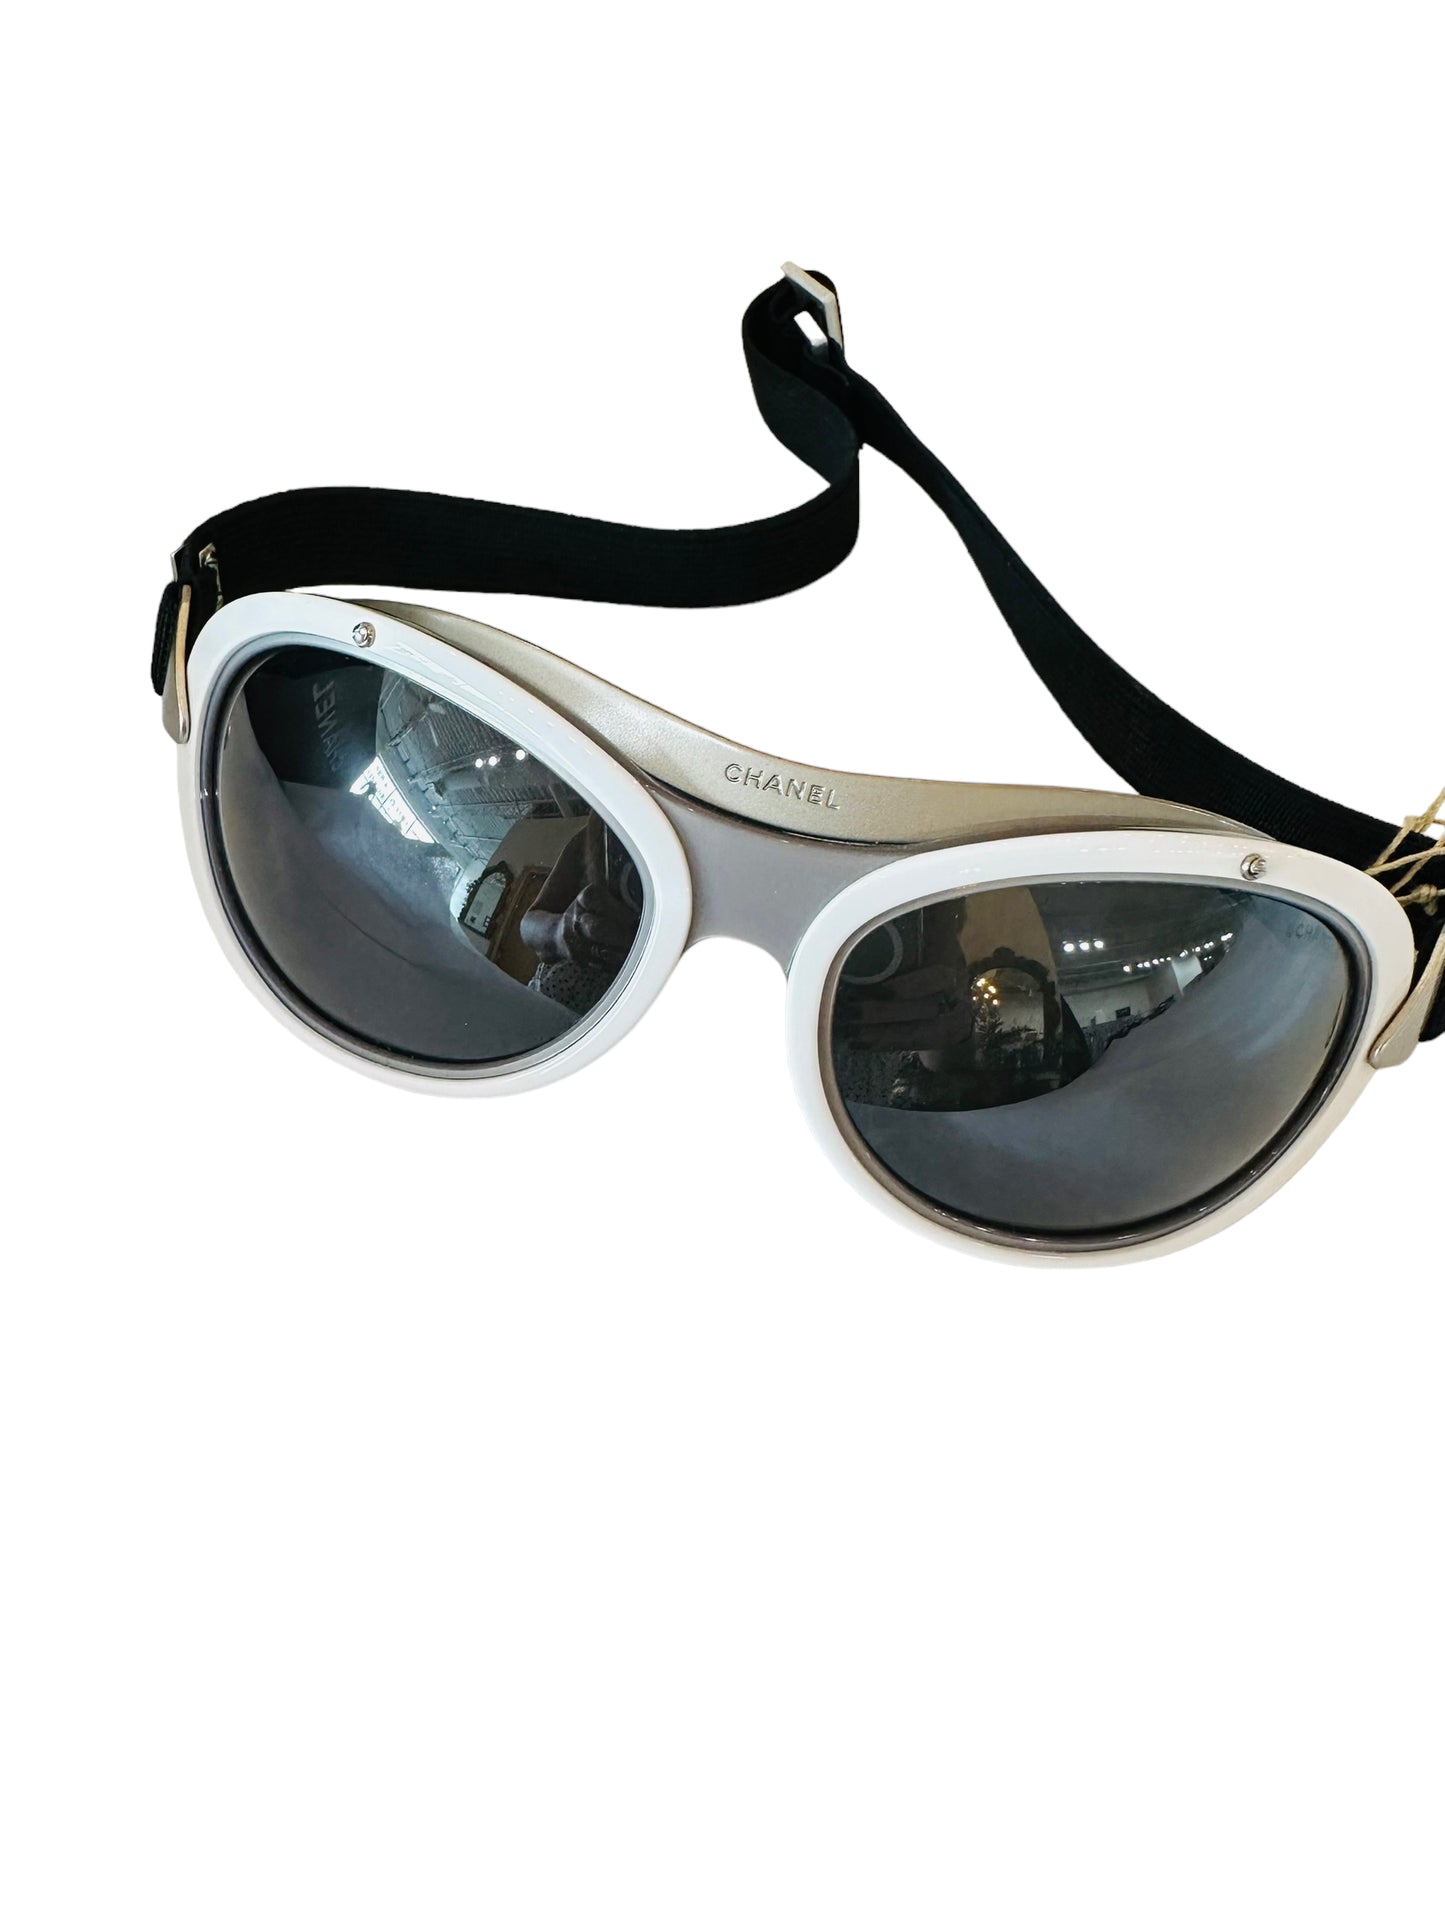 Chanel vintage sportsline sunglasses goggles swim ski raquetball like new with case